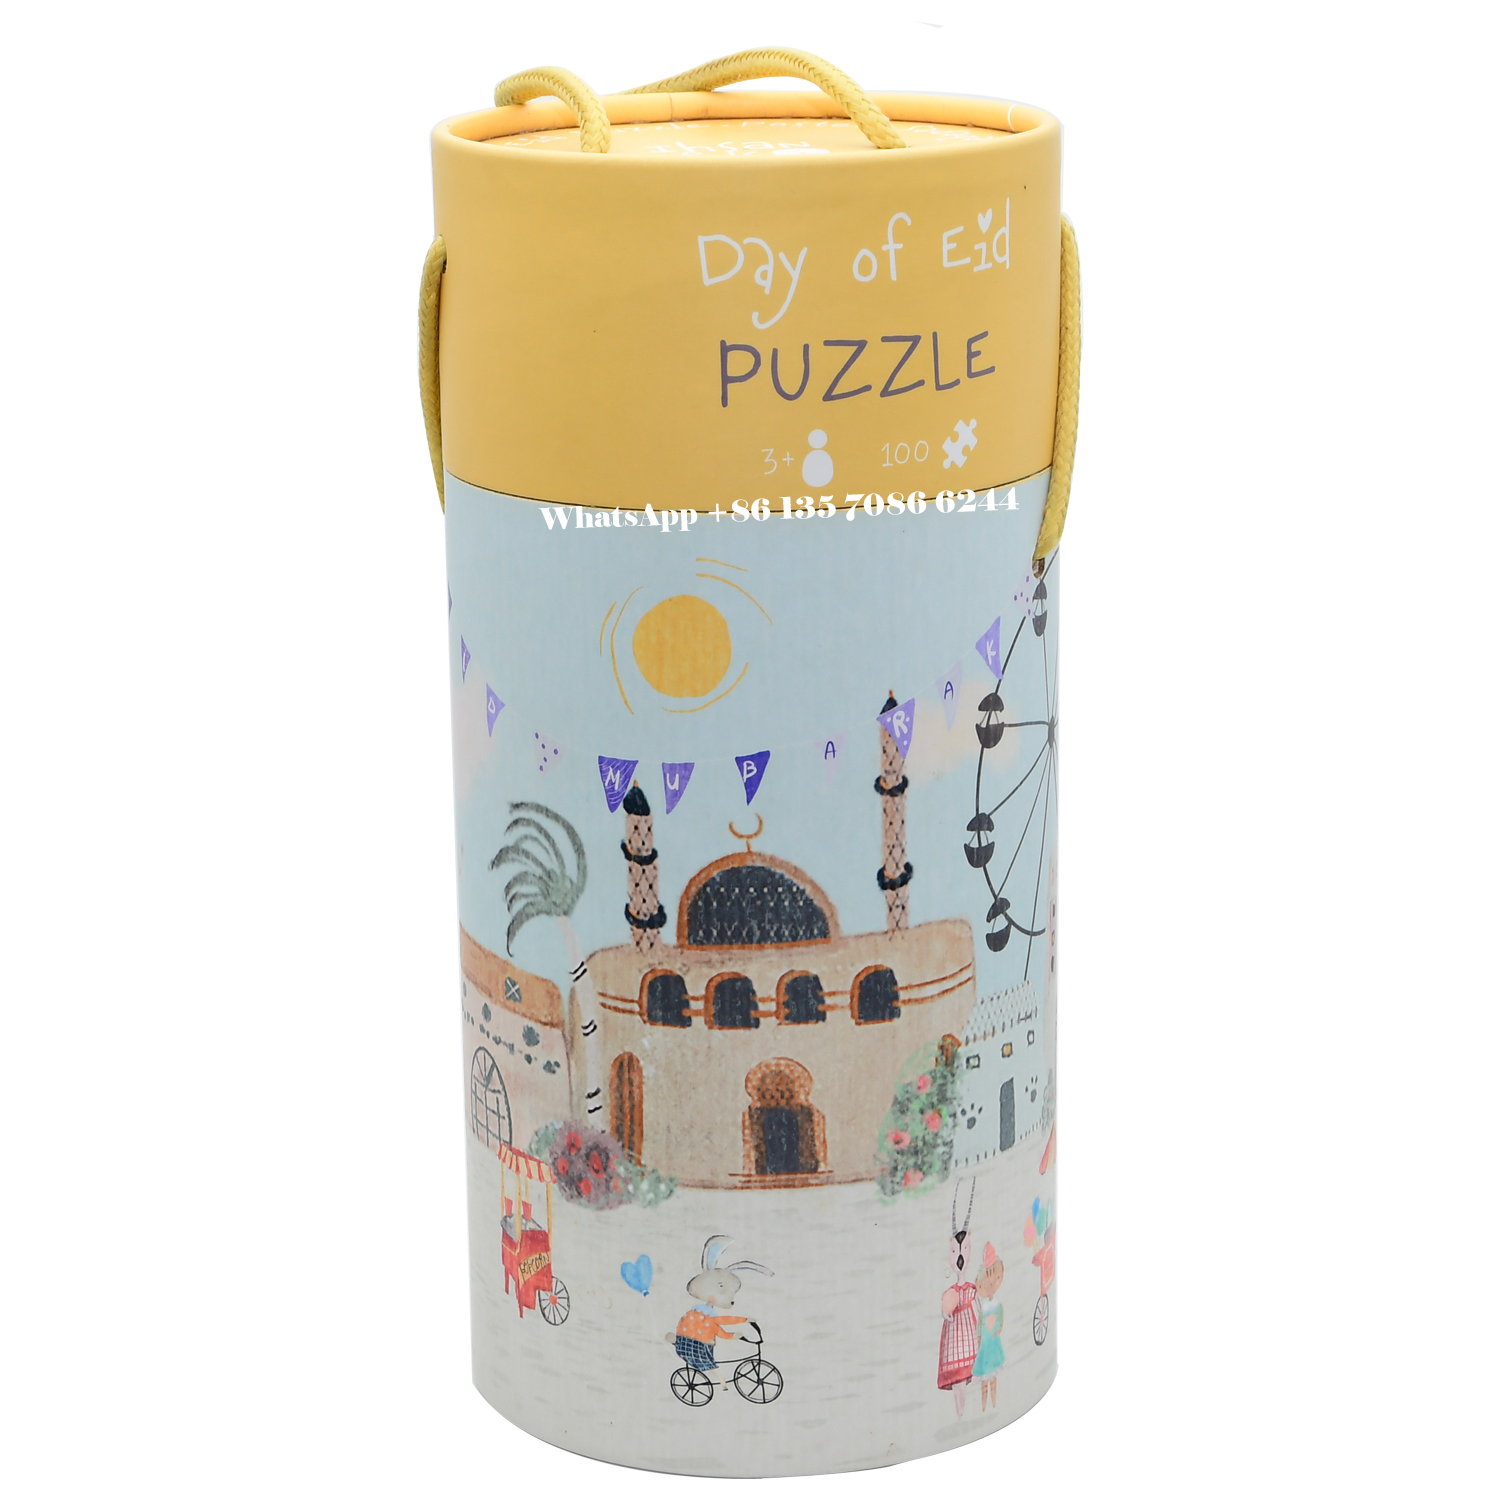  Puzzle-Papierrohrverpackung für Puzzles, Kartonzylinderboxen  